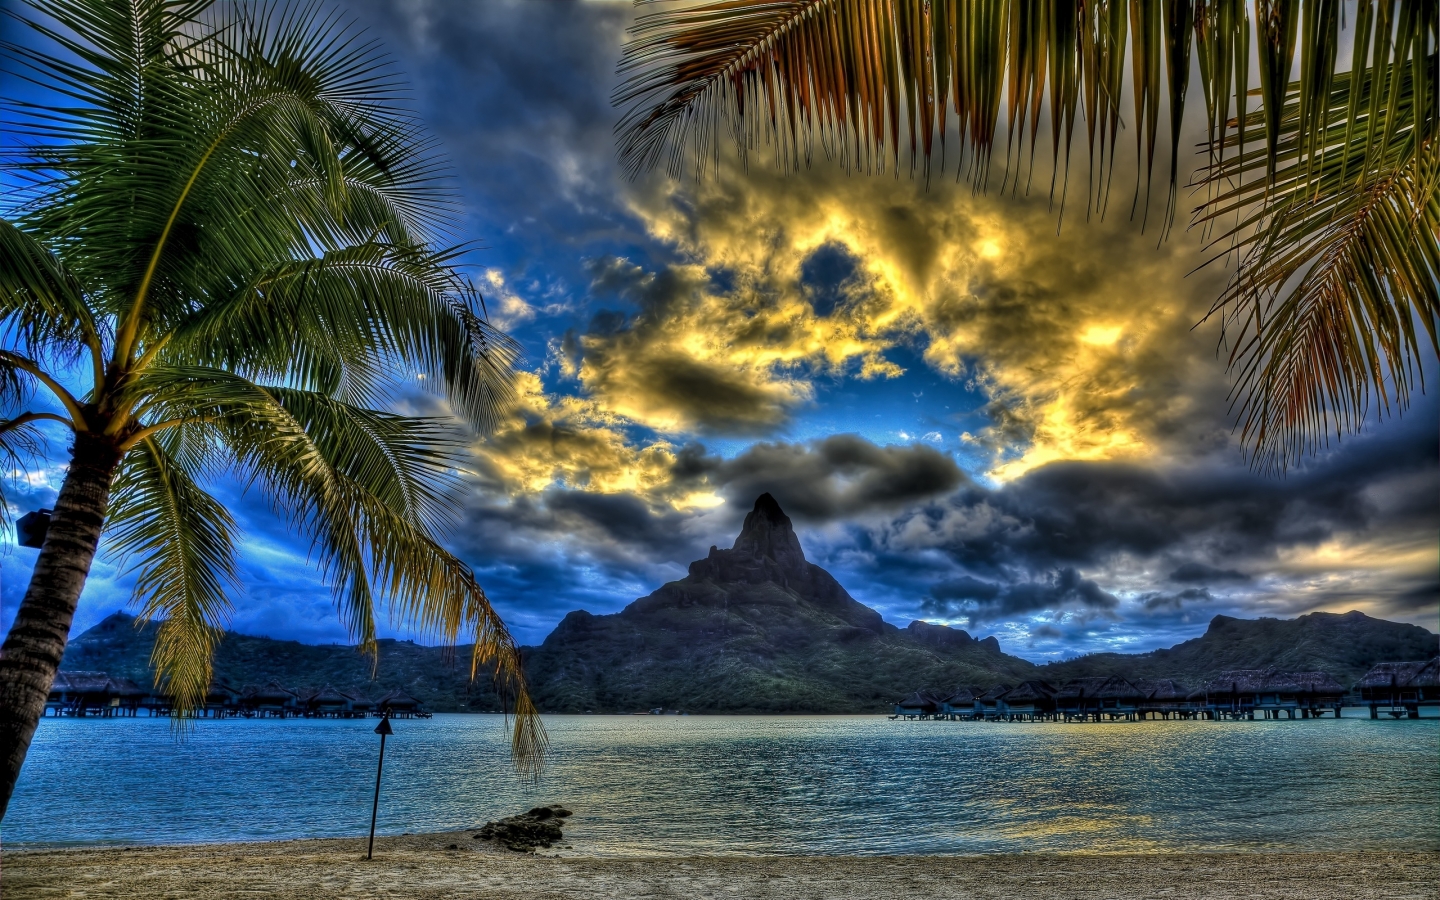 Tropical Beach for 1440 x 900 widescreen resolution